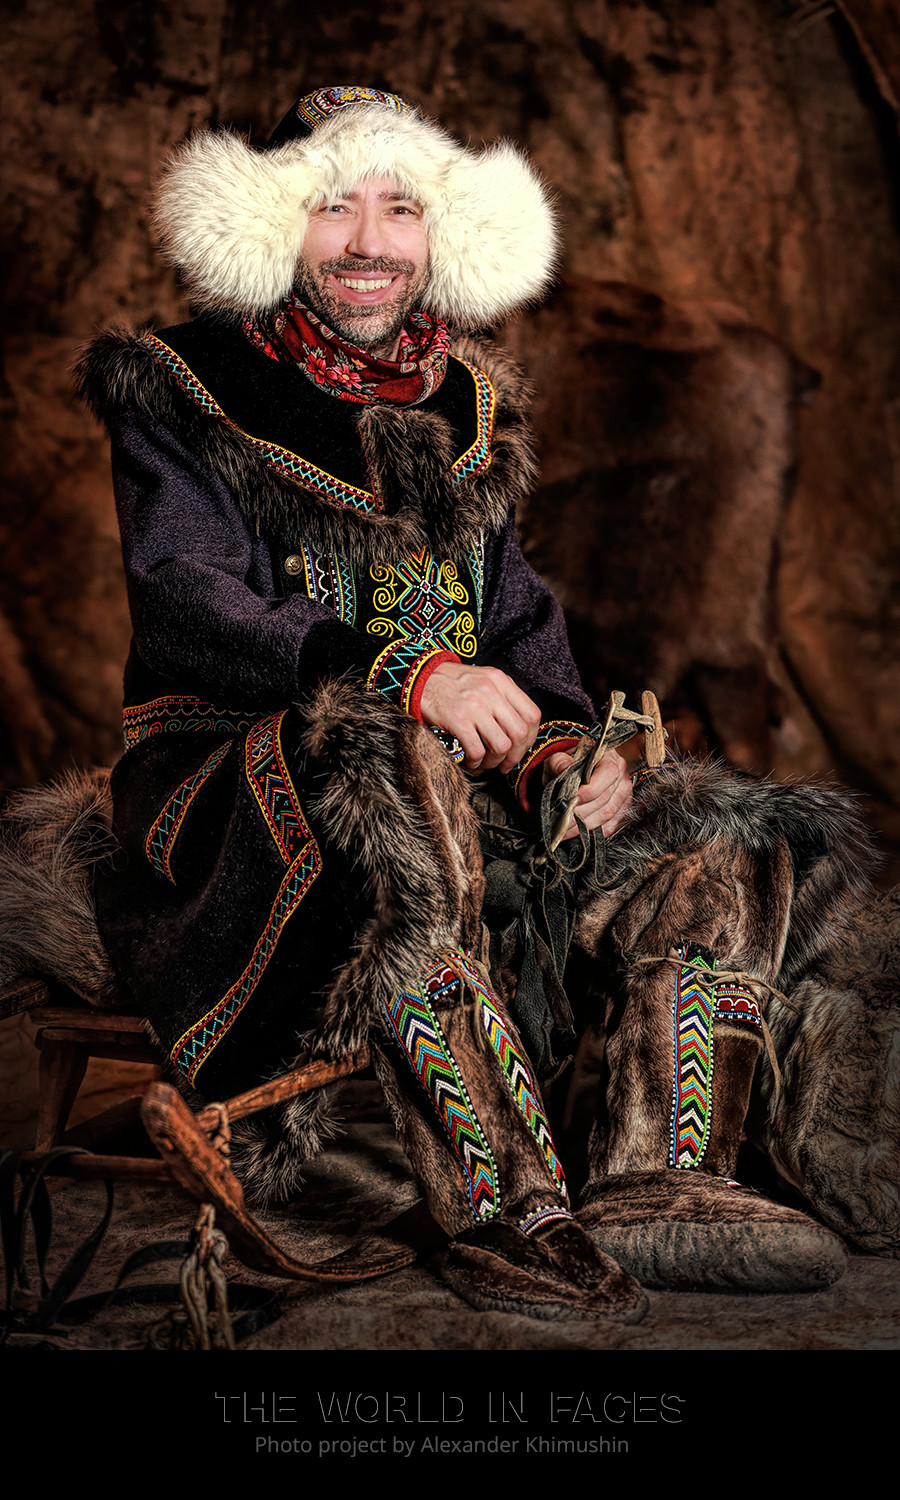 Alexander Khimushin memakai pakaian tradisional suku Dolga.